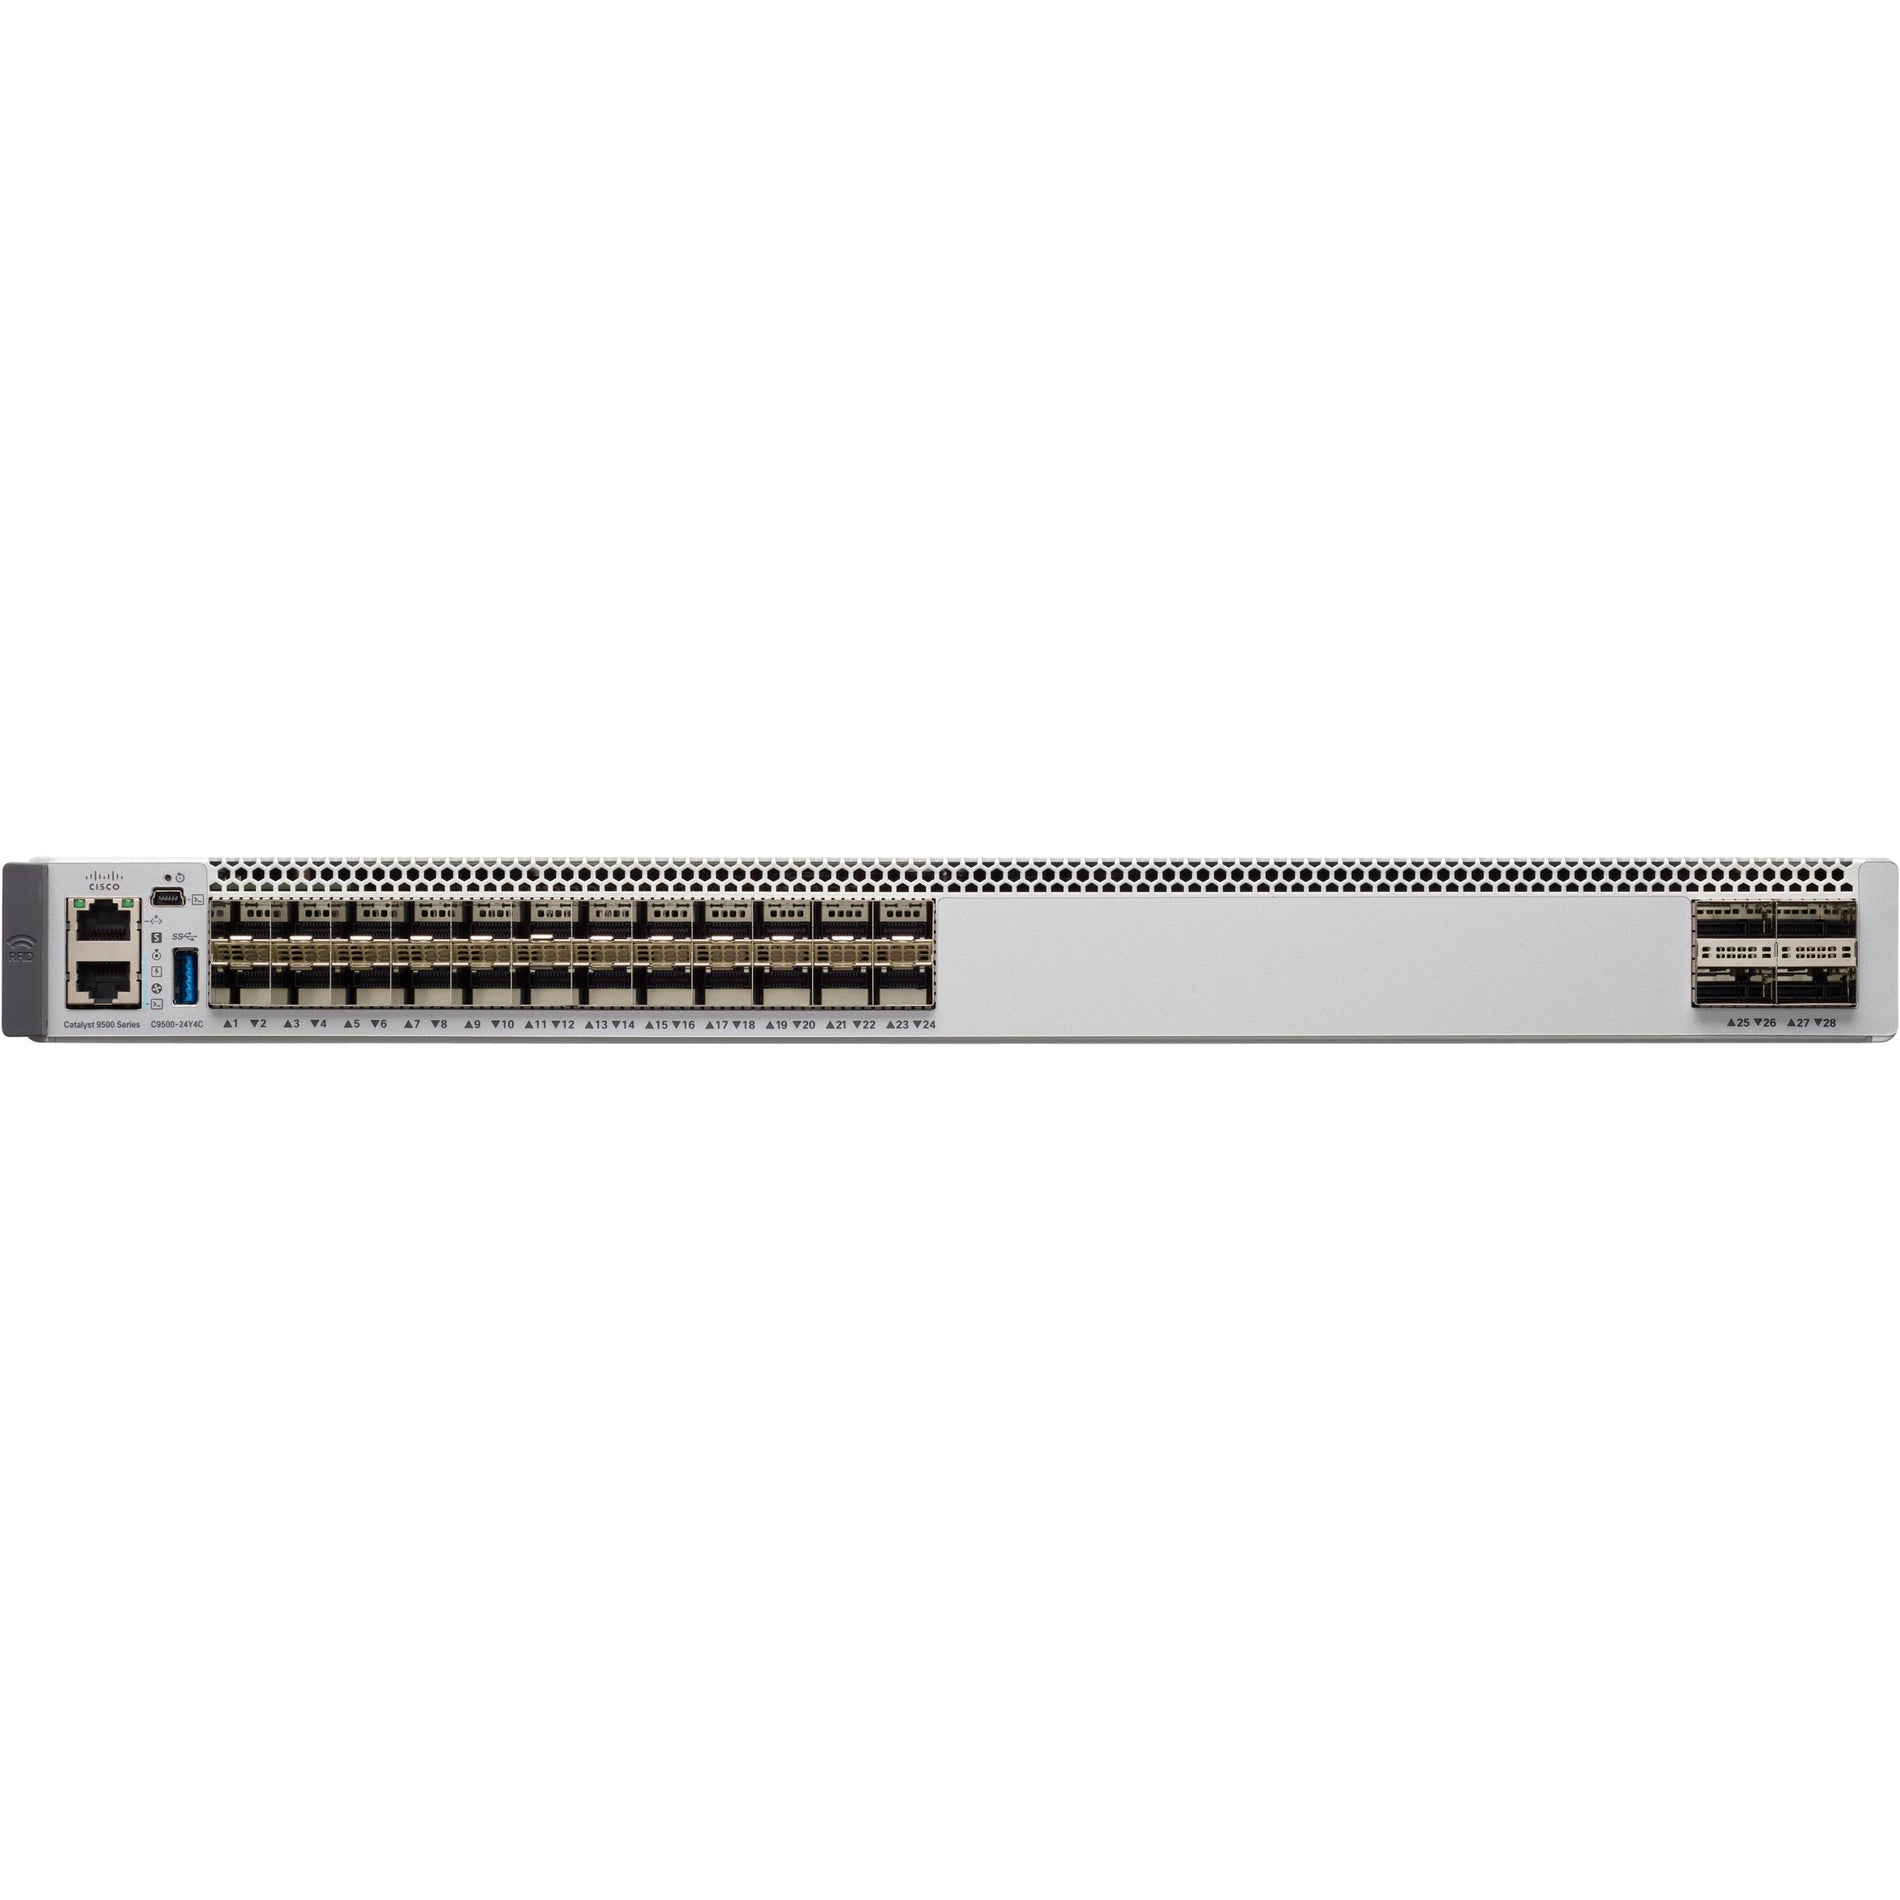 Cisco C9500-24Y4C-A Catalyst C9500-24Y4C Layer 3 Switch, 24 x 25 Gigabit Ethernet Expansion Slot, 4 x 100 Gigabit Ethernet Uplink